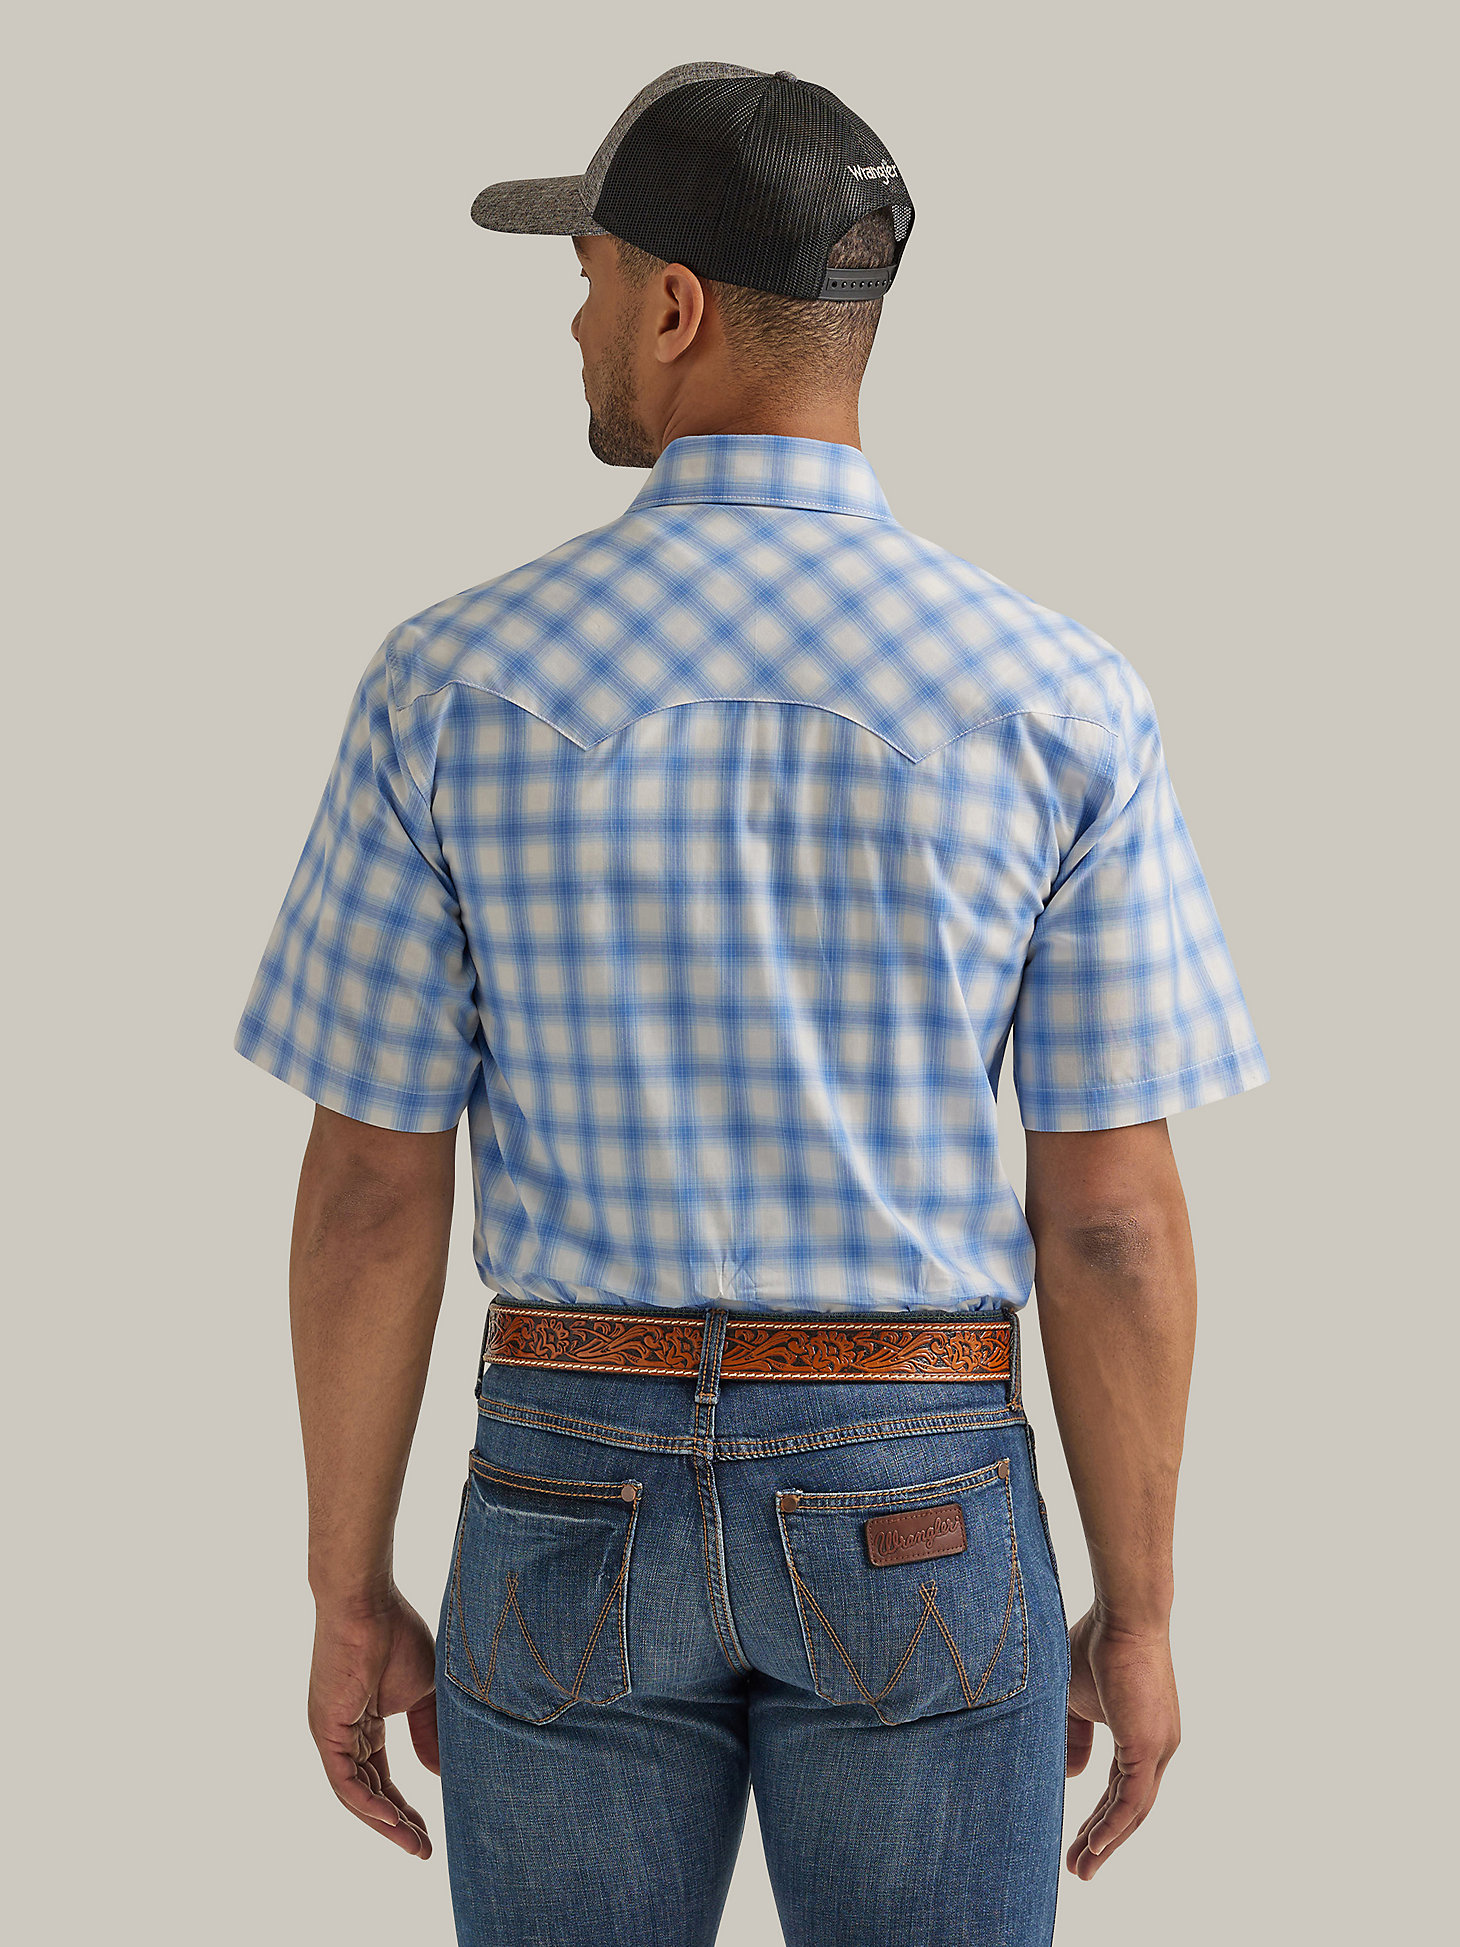 Men's Wrangler Retro® Short Sleeve Western Snap with Sawtooth Flap Pocket Plaid Shirt in Sky Blue Plaid alternative view 1